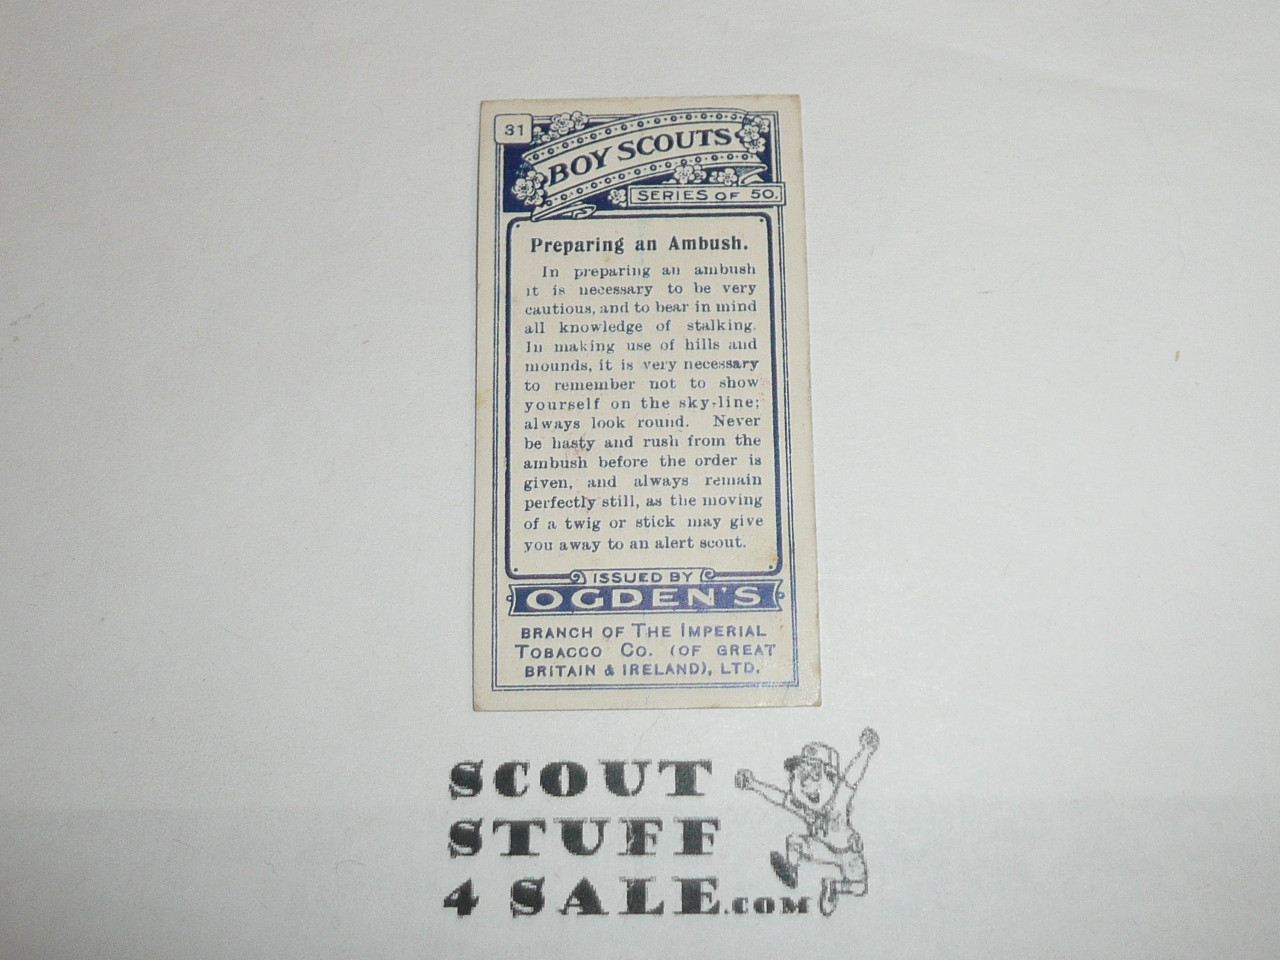 Ogden Tabacco Company Premium Card, First Boy Scout Series of 50 (Blue Backs), Card #31 Preparing an Ambush, 1911